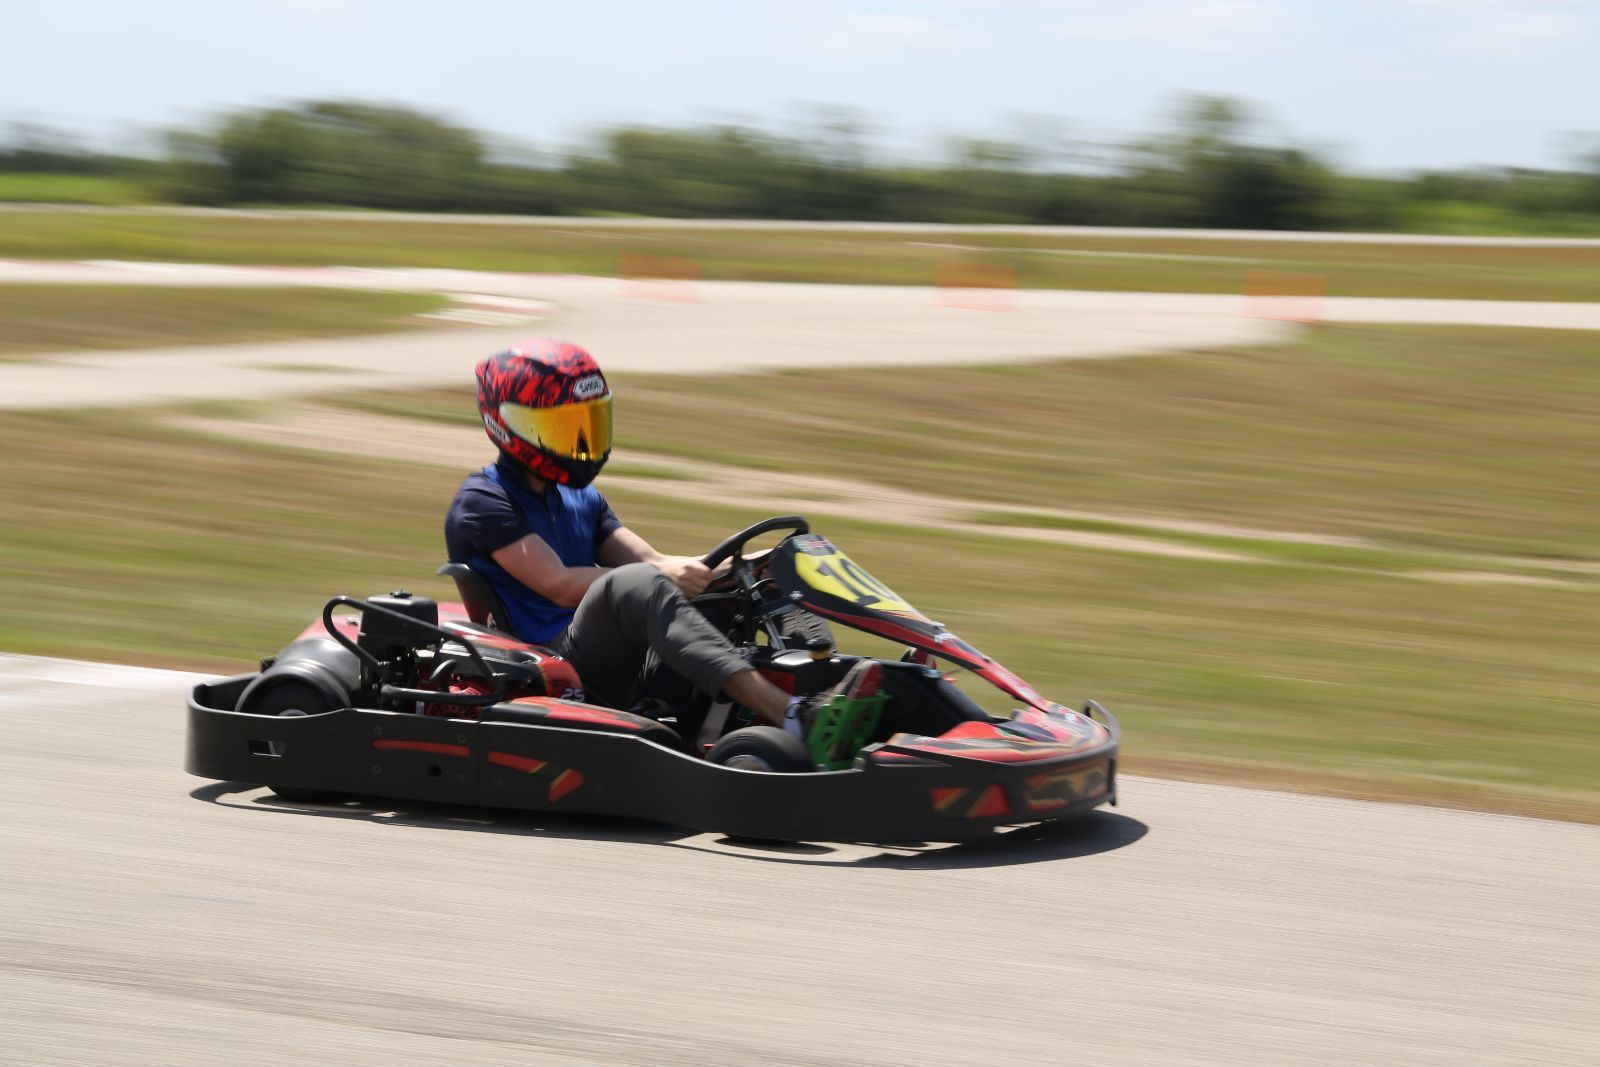 Go Karts in Houston, Kart Racing